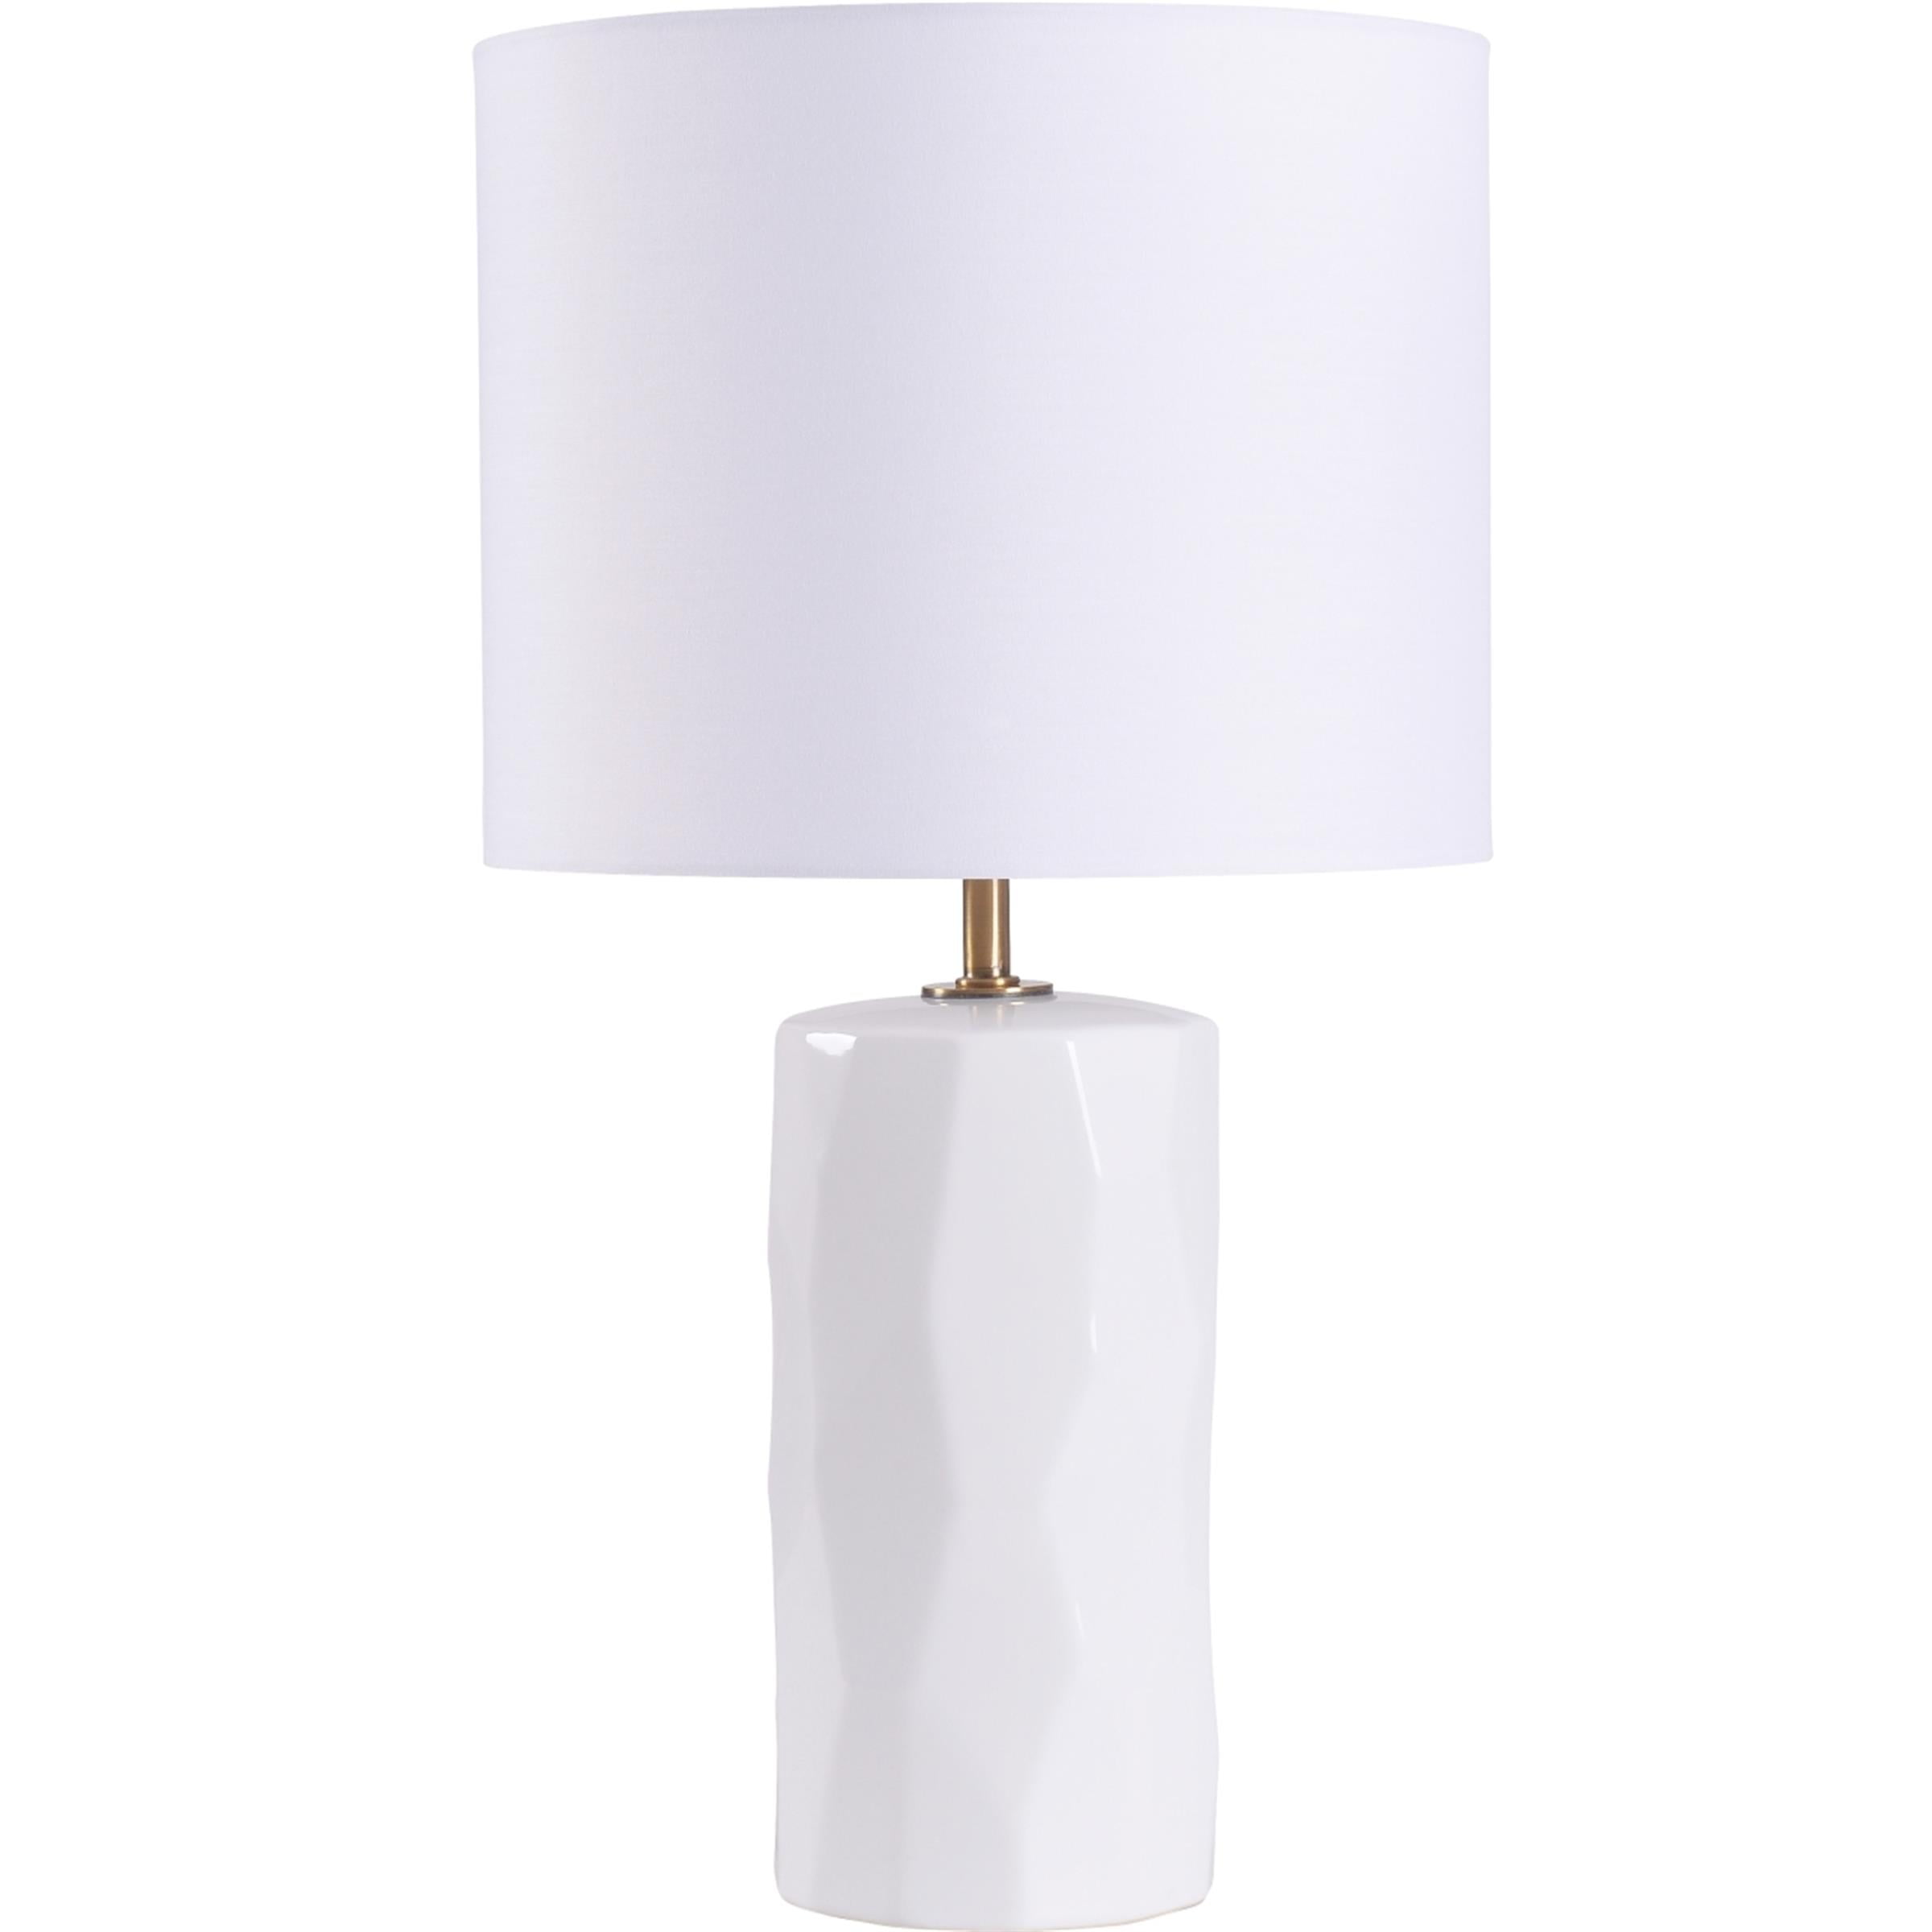 Mainstays White Ceramic Table Lamp, 17"H - image 1 of 6